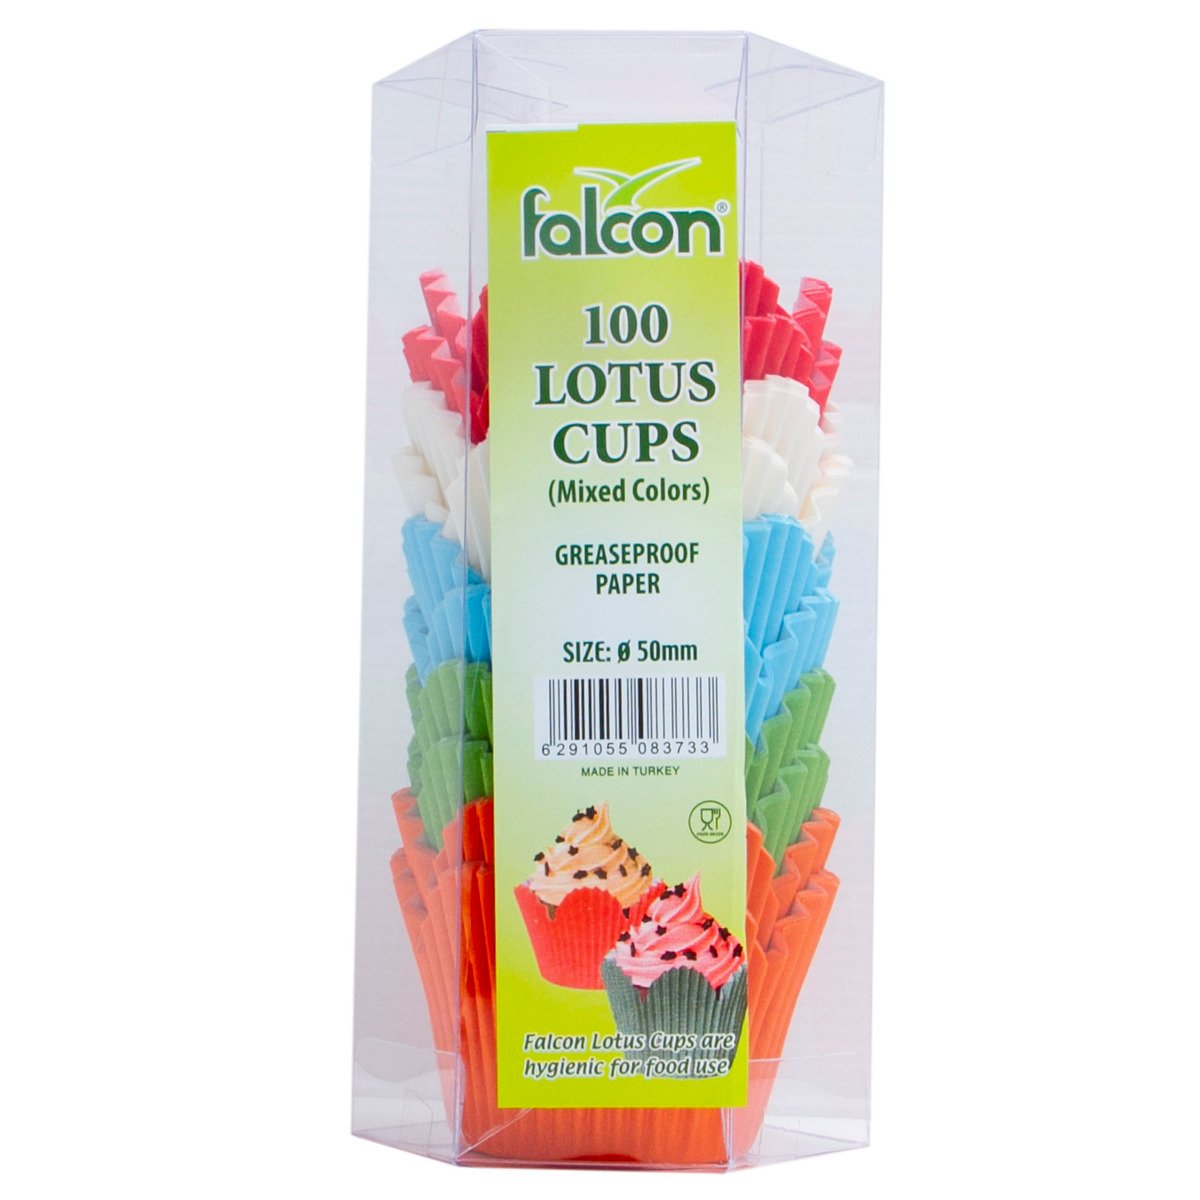 Falcon Mixed Colors Lotus Cups 100pcs